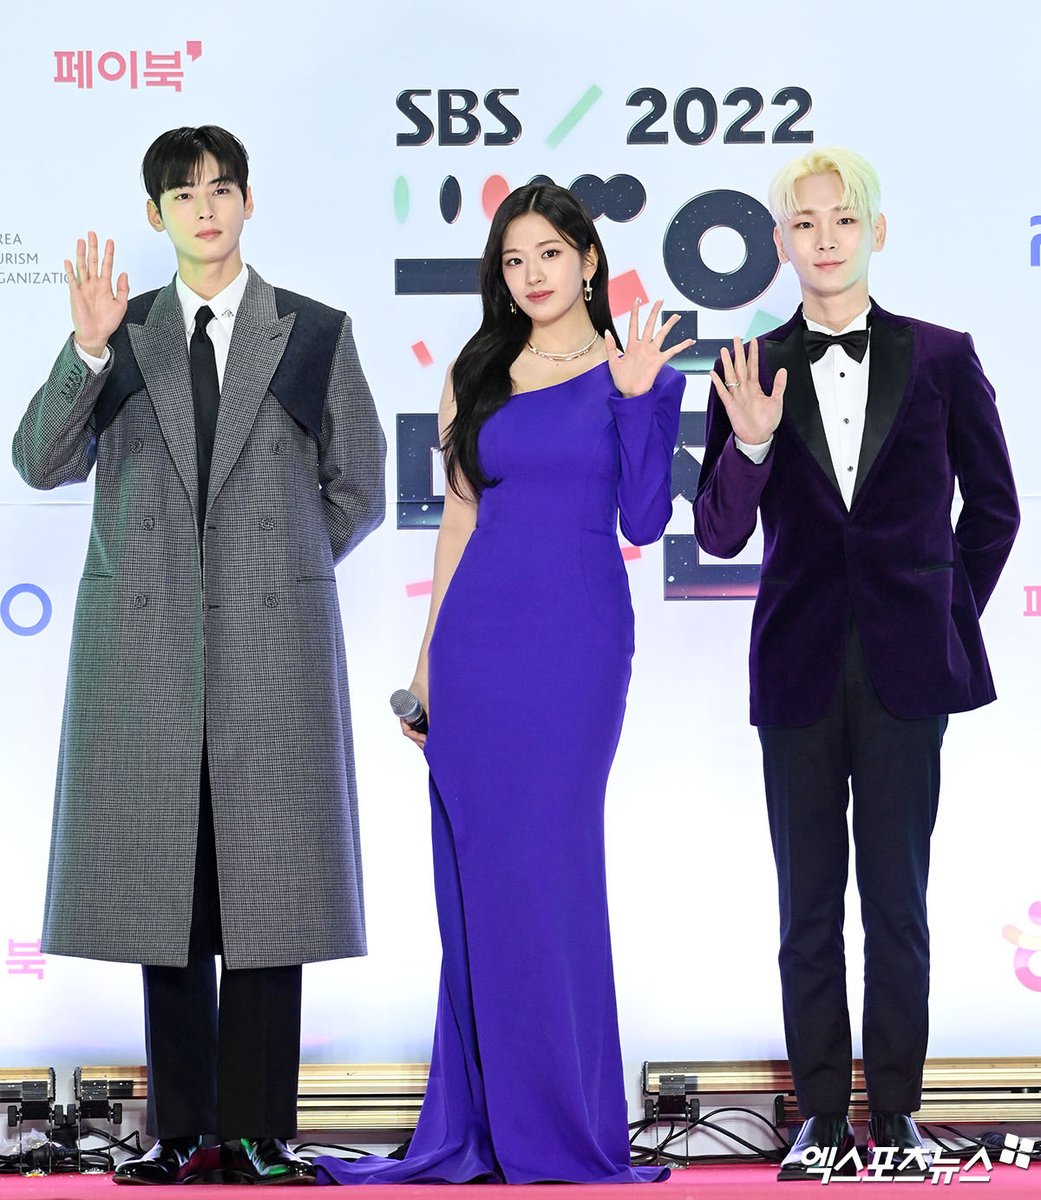 ASTRO's Cha Eun Woo & IVE's Yujin to host this year's 'SBS Gayo Daejeon